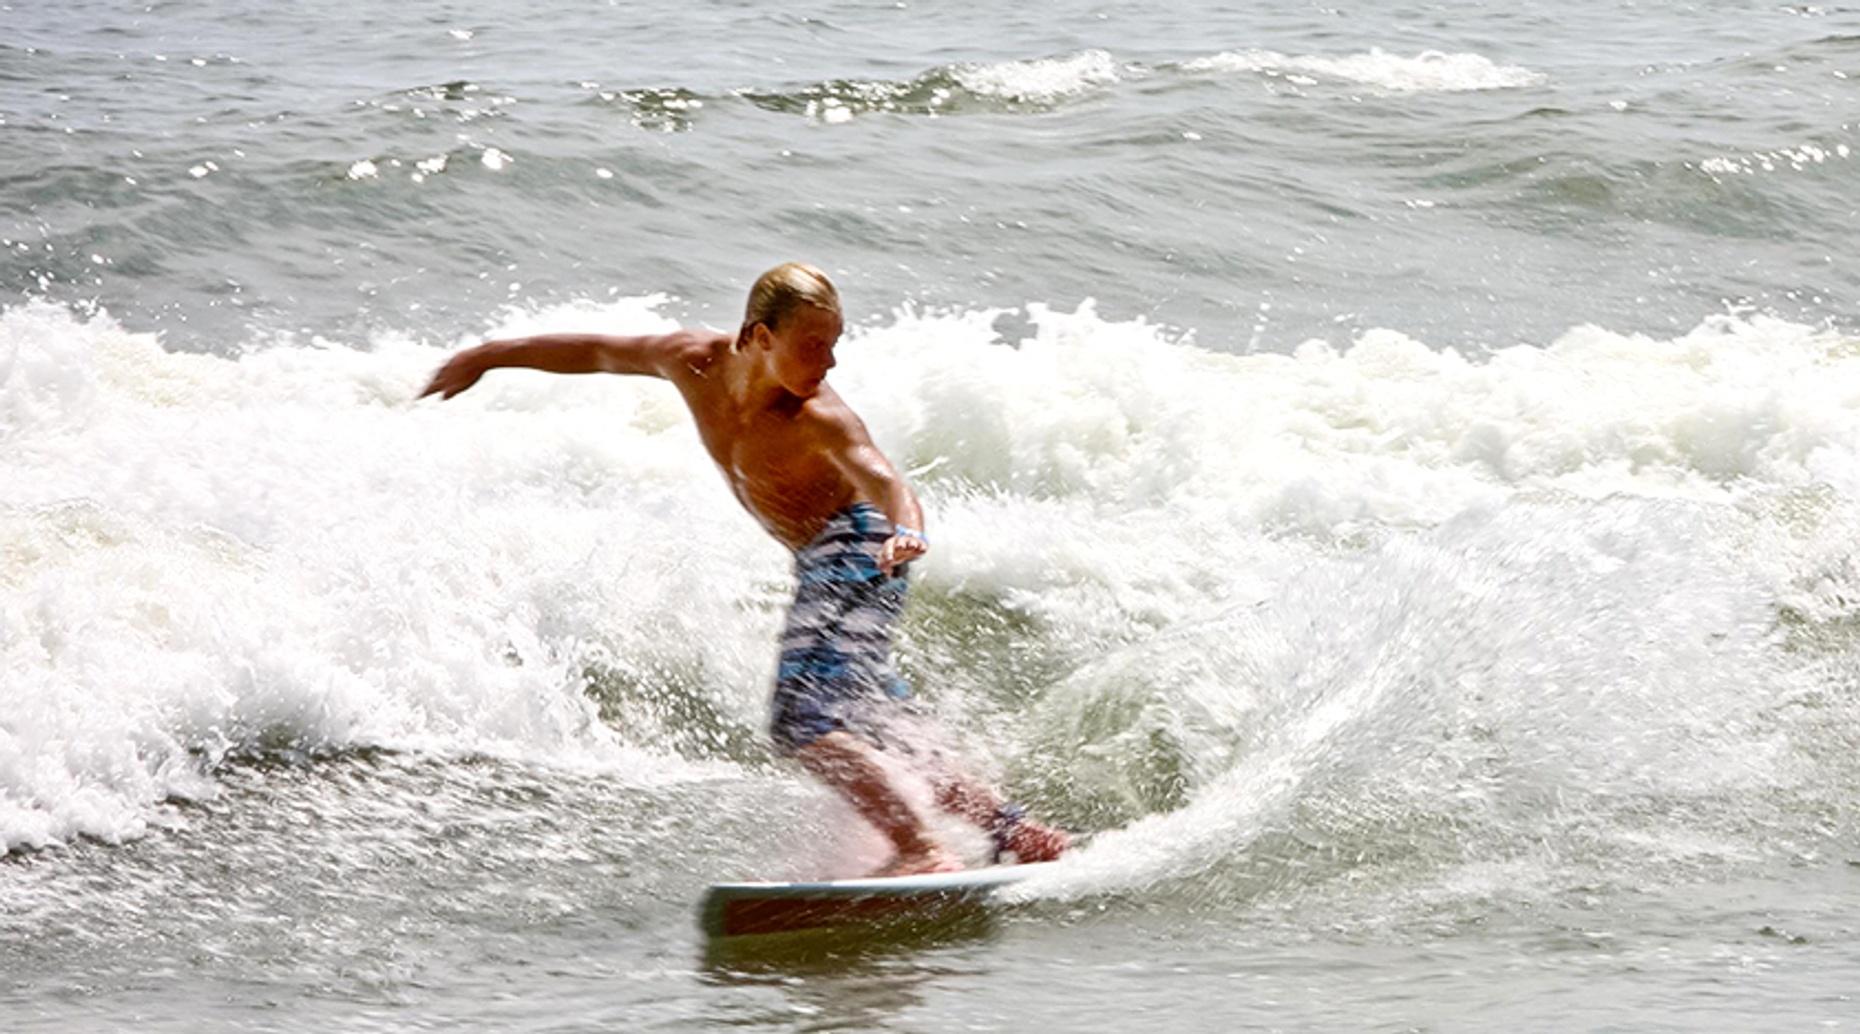 Atlantic City Beginner Surfing Class